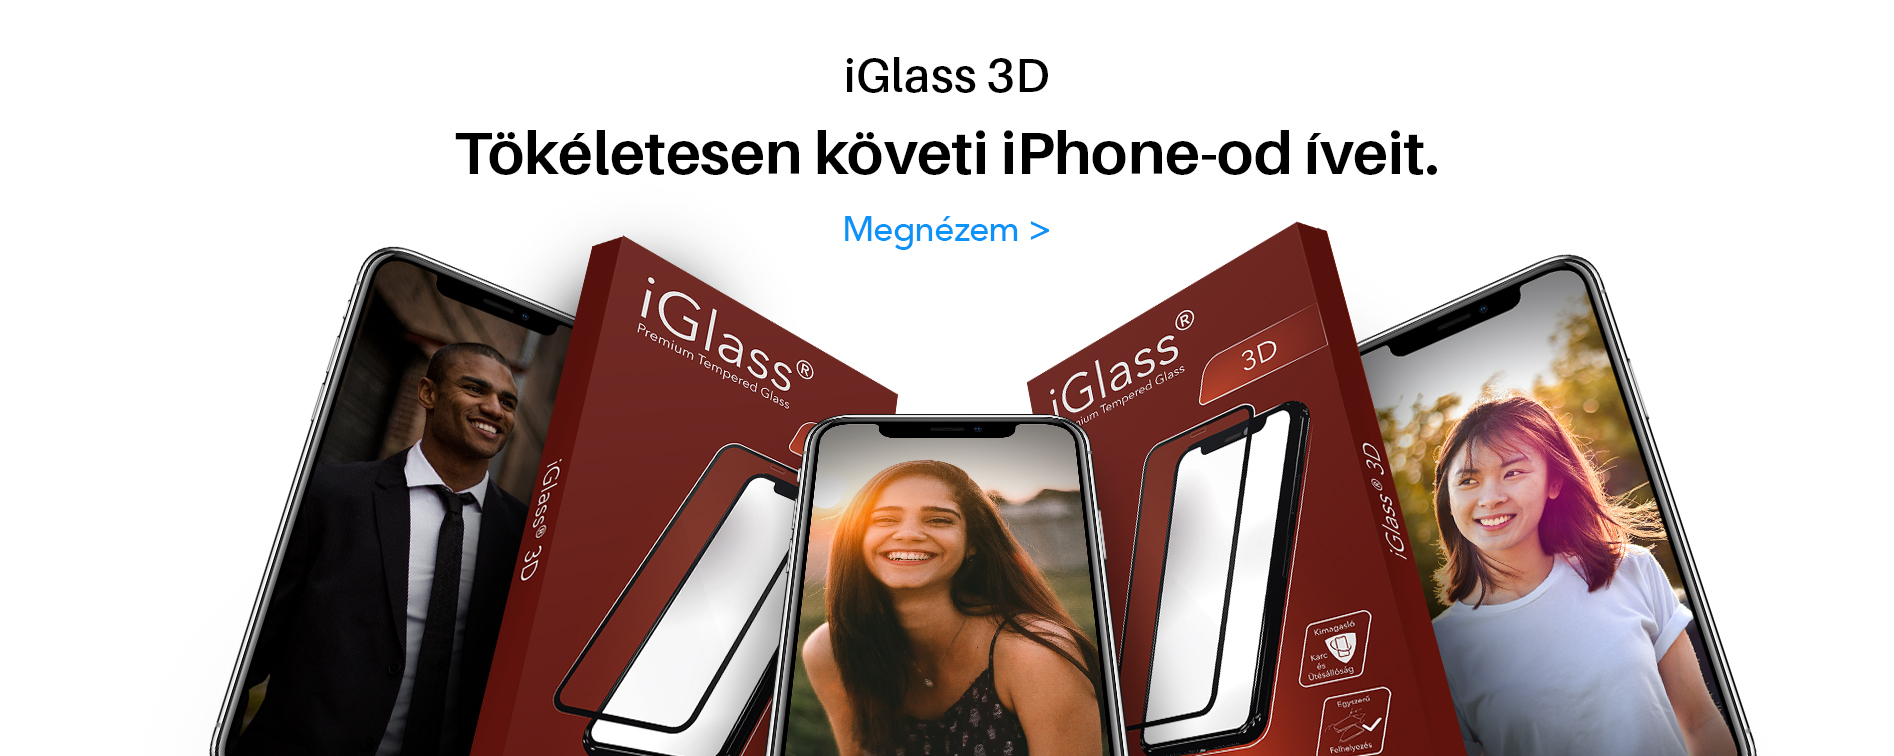 desktop 3D-iglass-iphone-uvegfolia